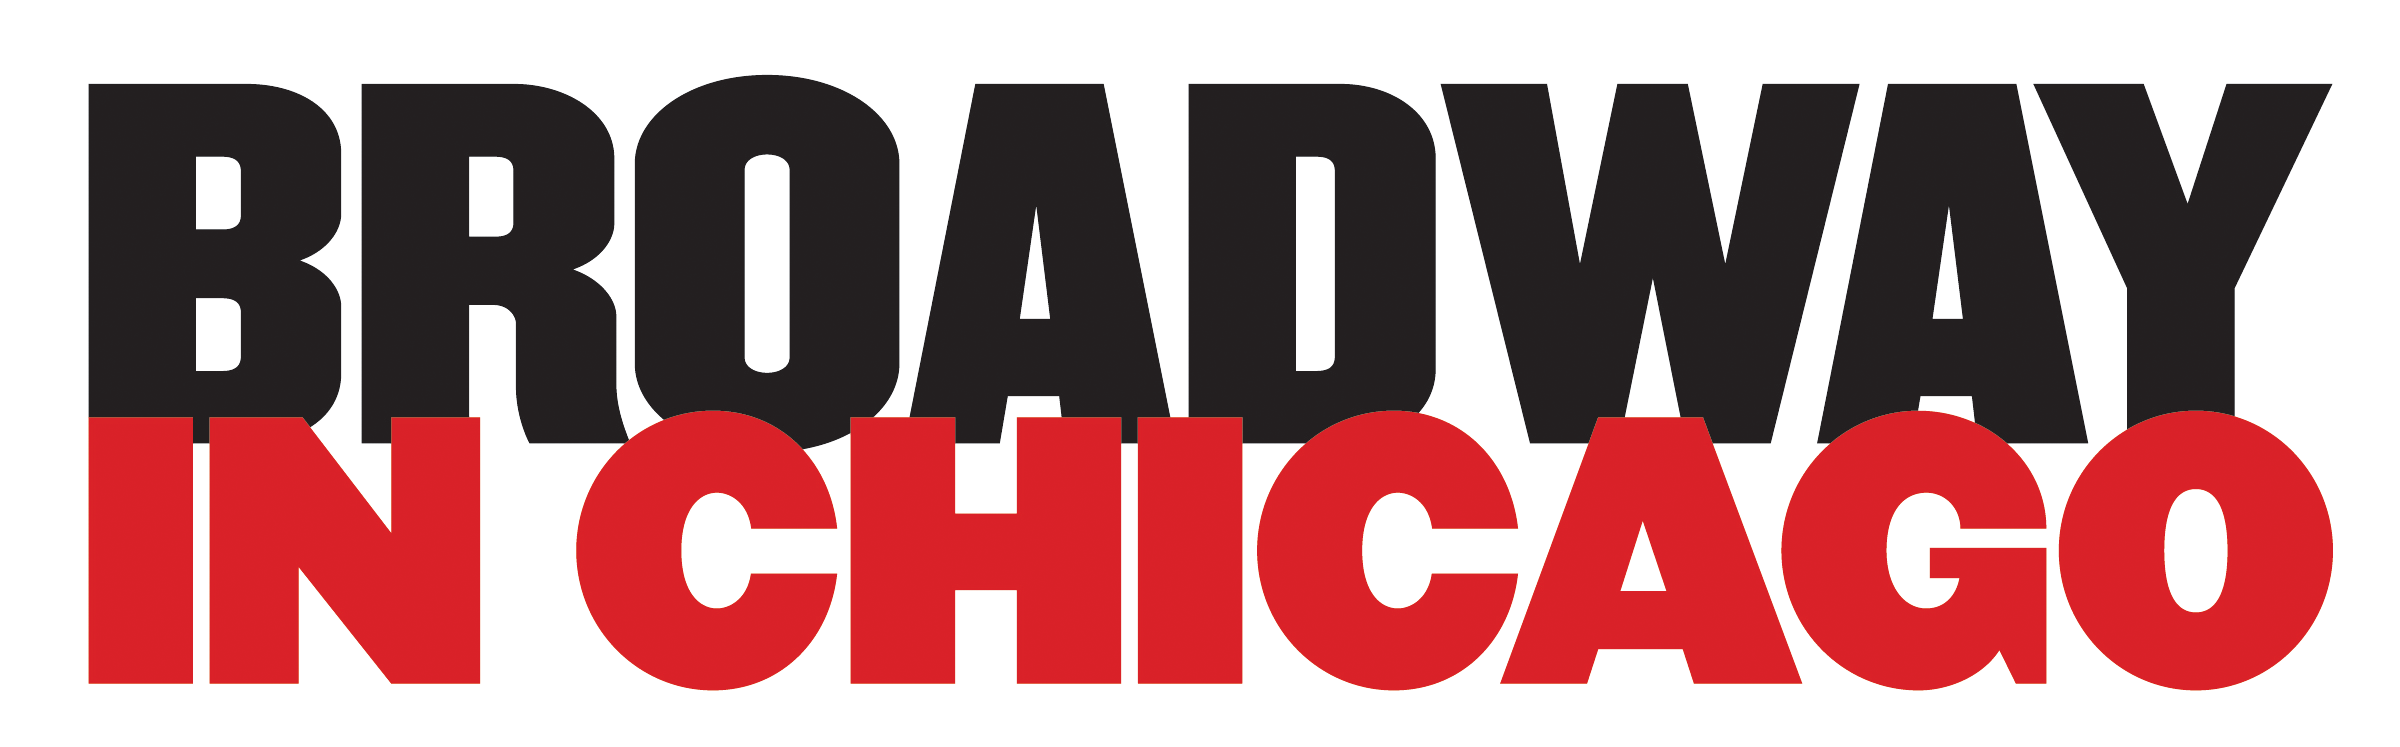 Broadway In Chicago logo